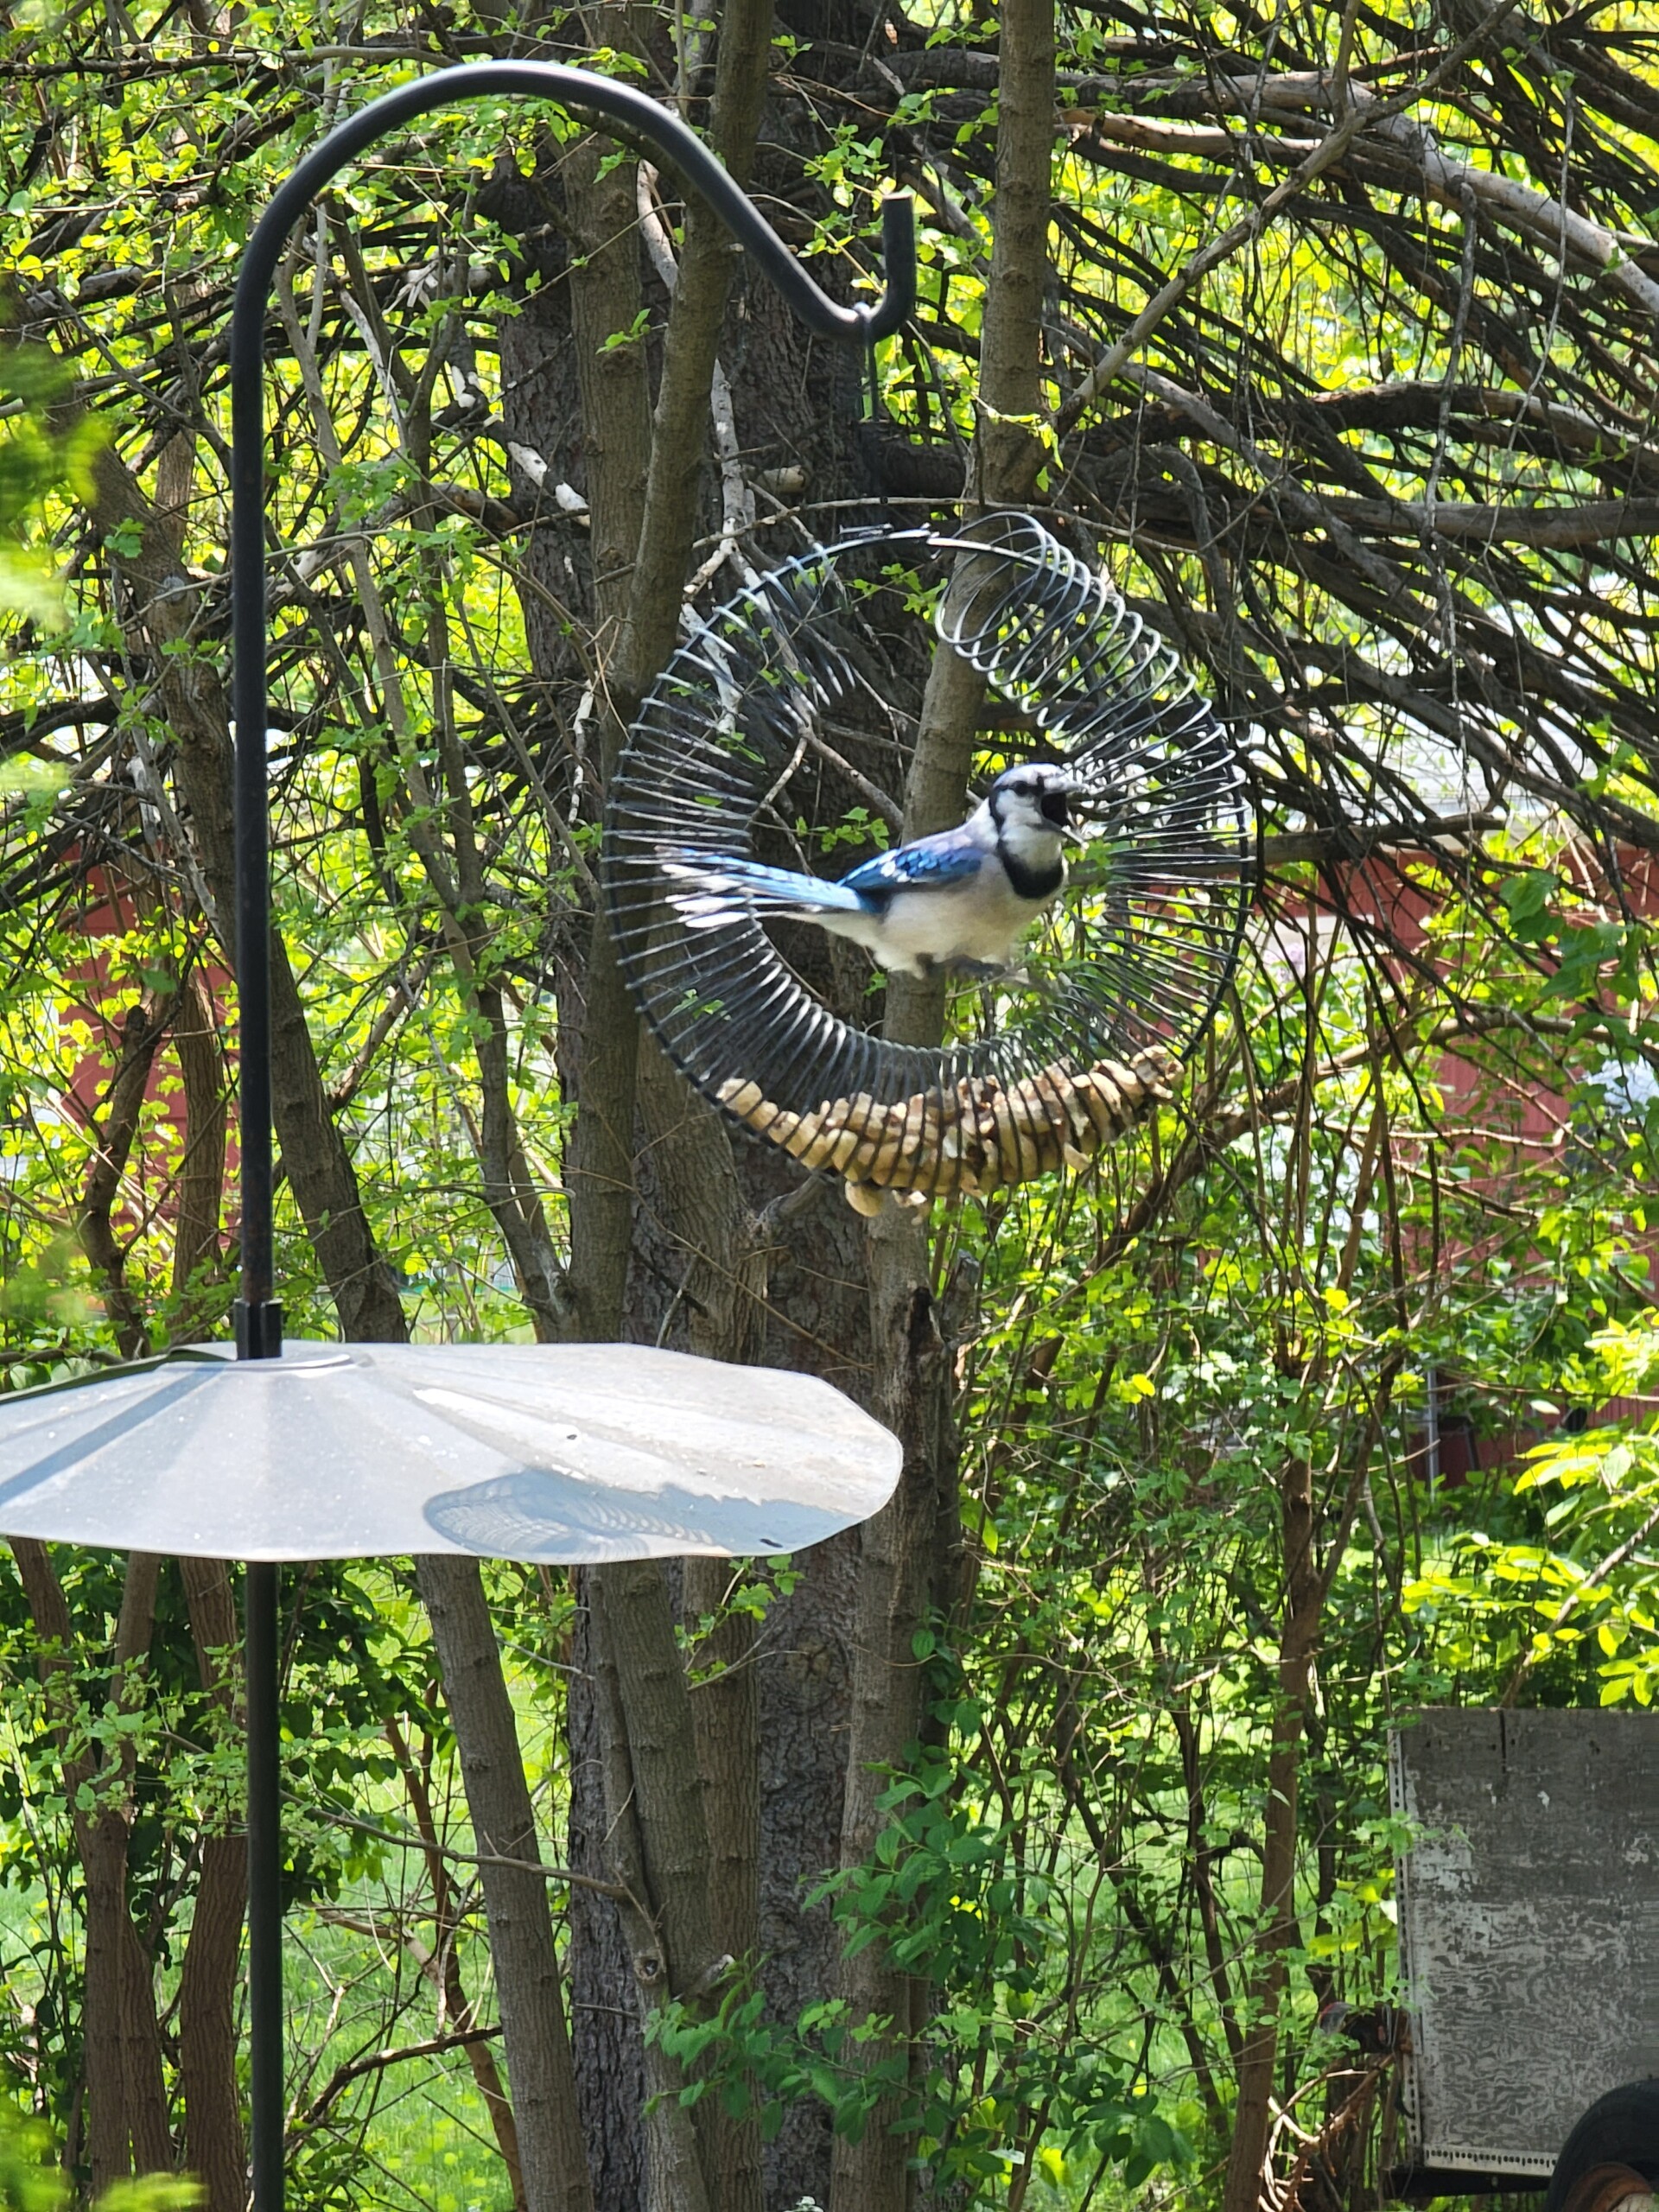 Blue jay on wire hoop peanut feeder